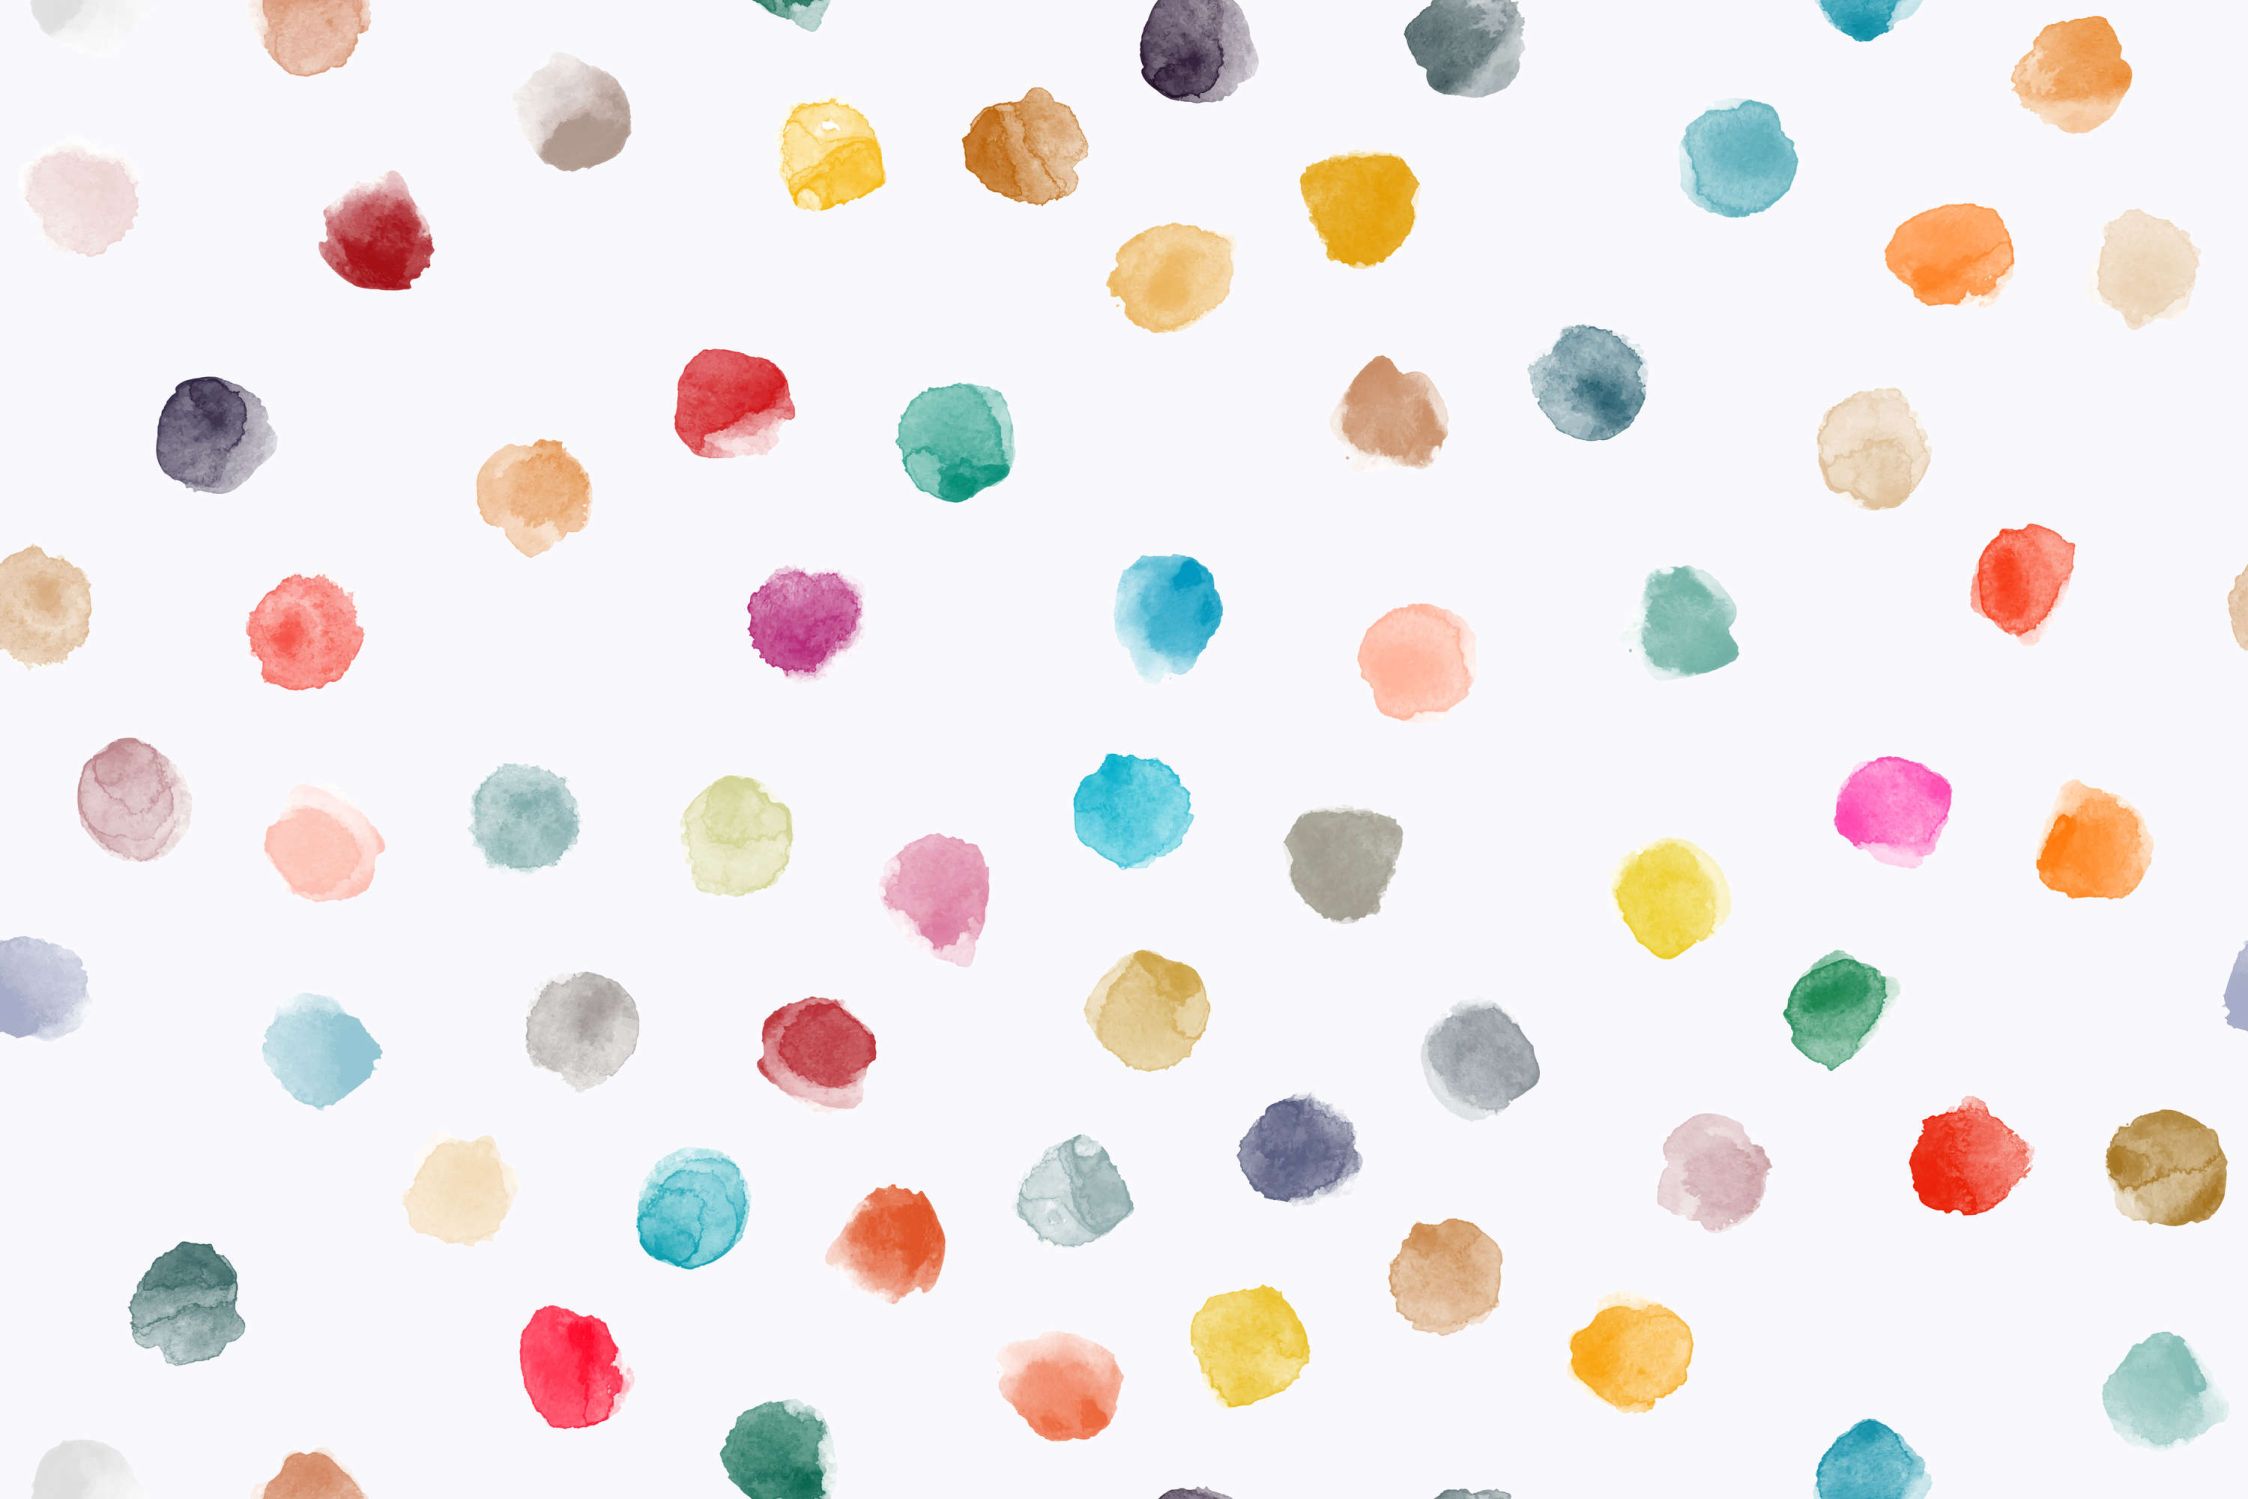             Nursery mural with colourful dots - Smooth & matt non-woven
        